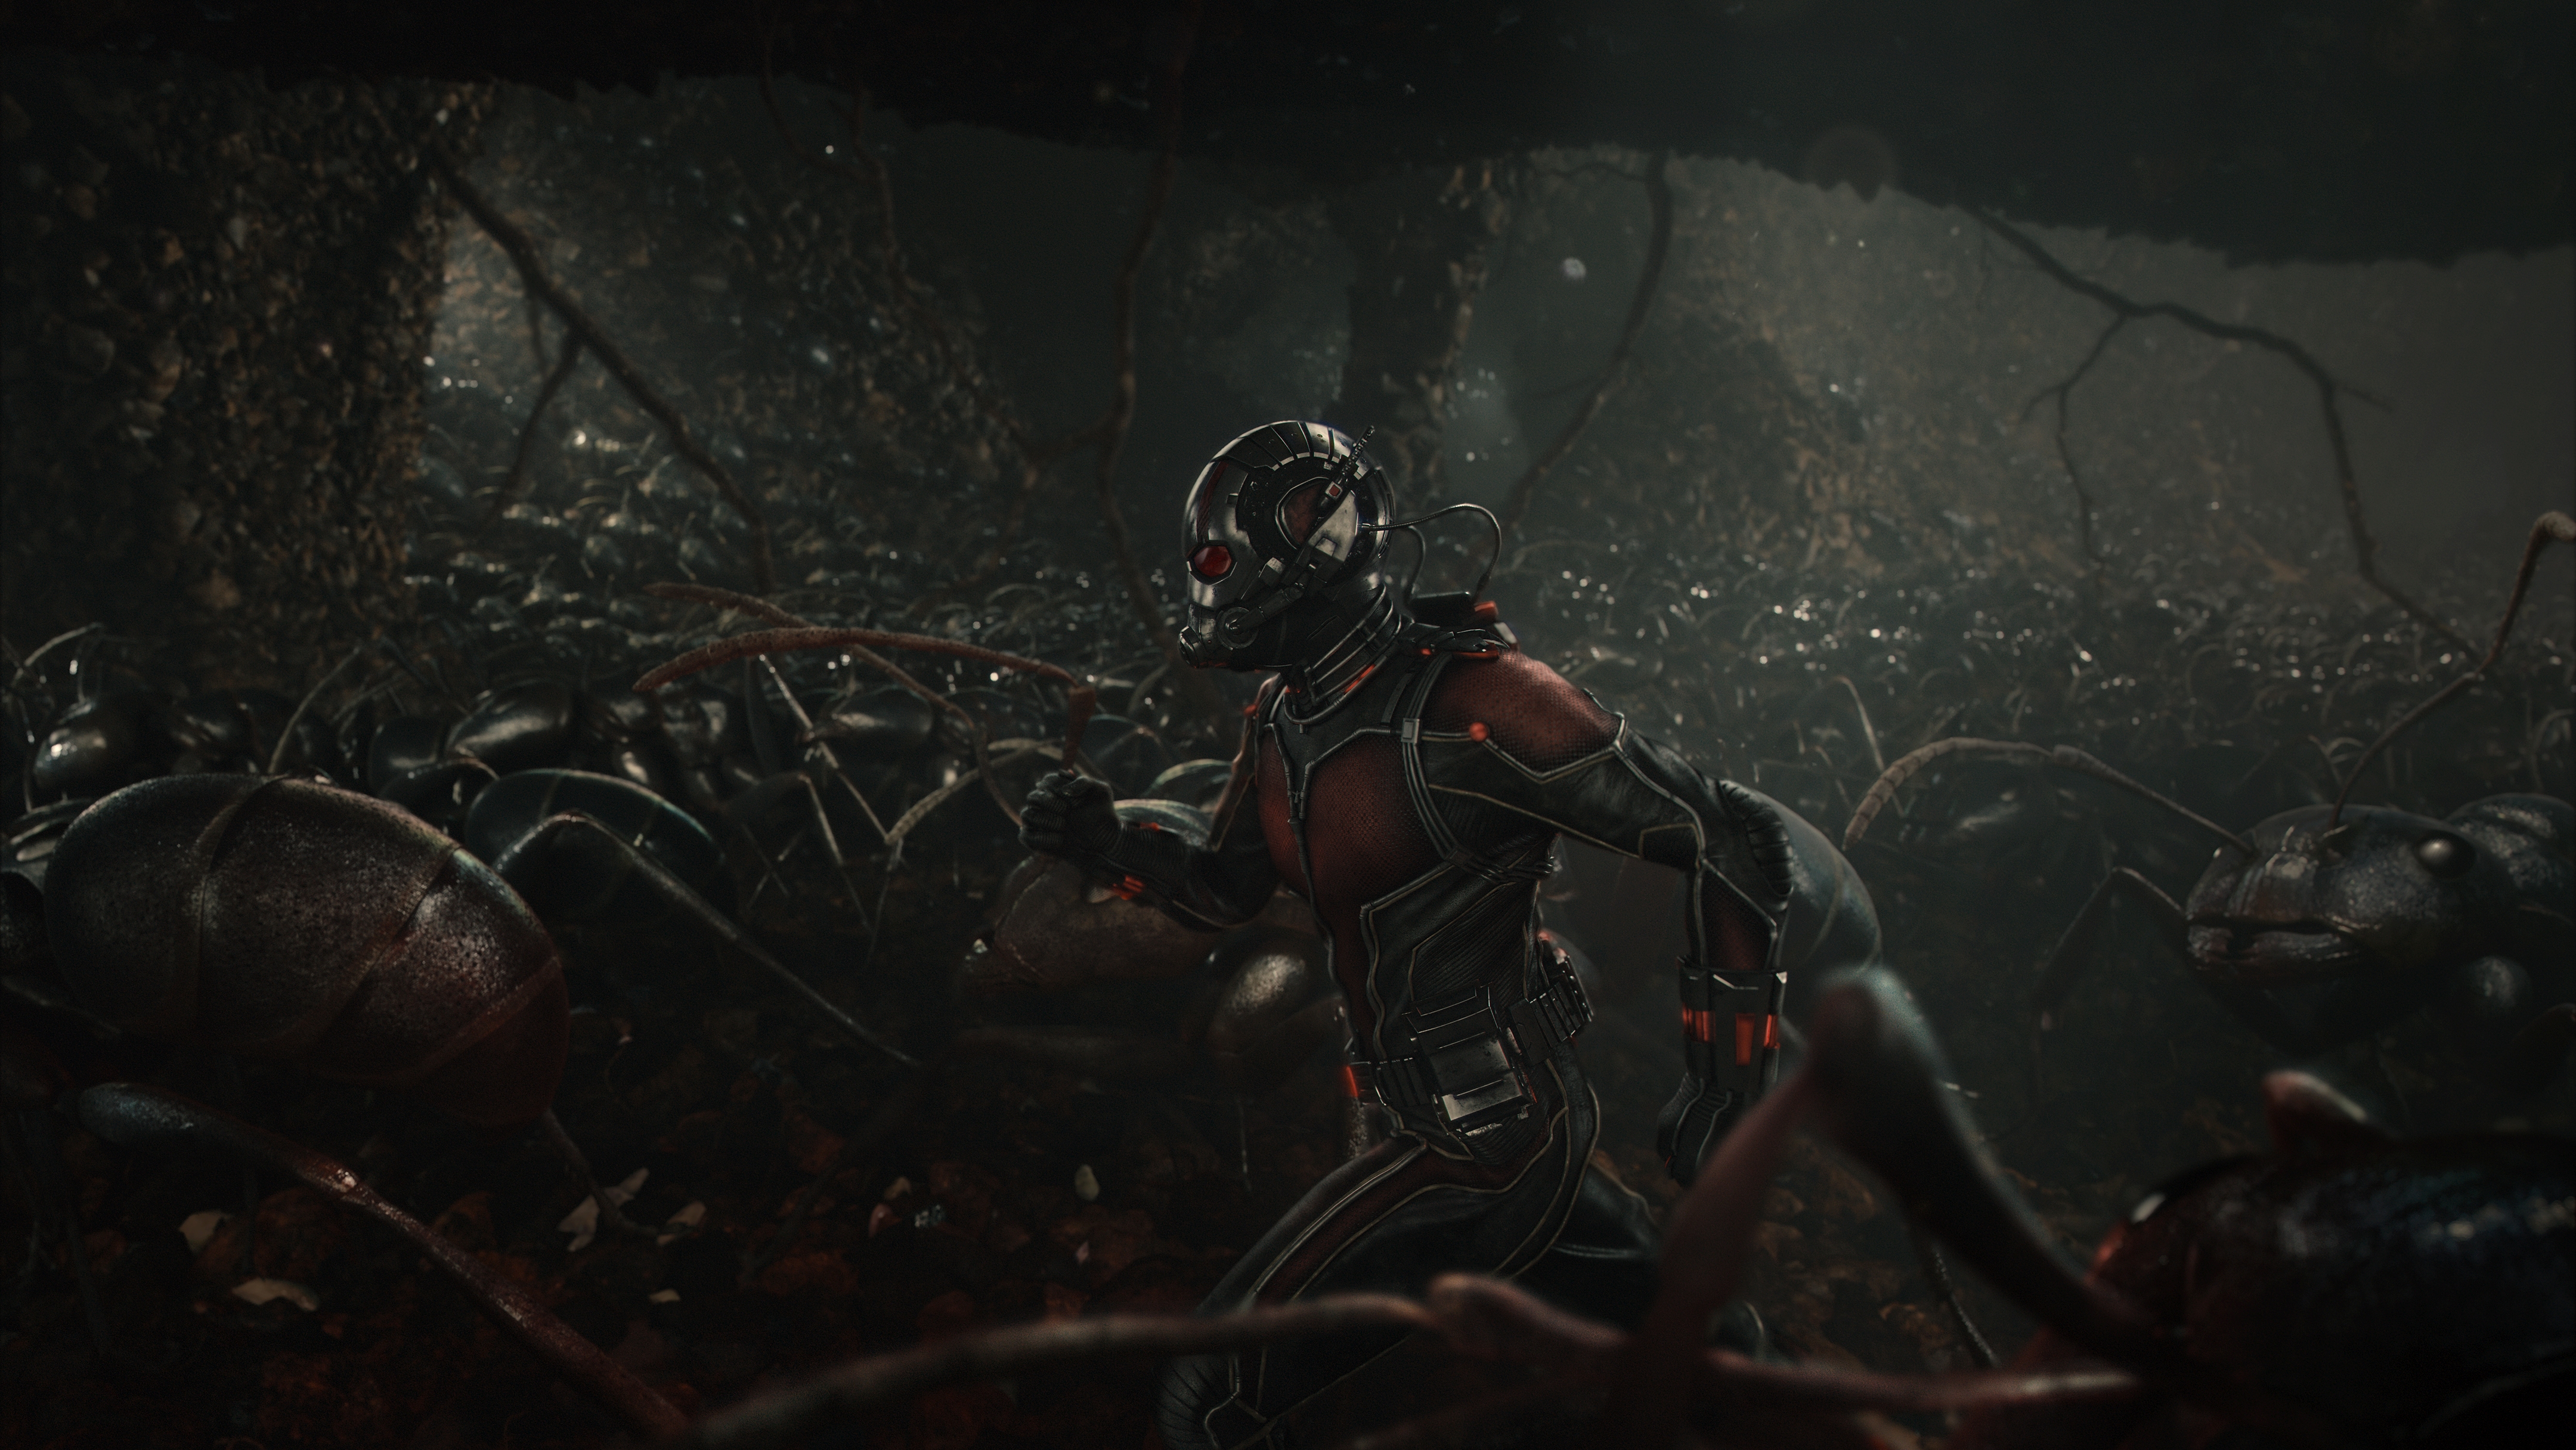 Descarga gratuita de fondo de pantalla para móvil de Películas, Ant Man.